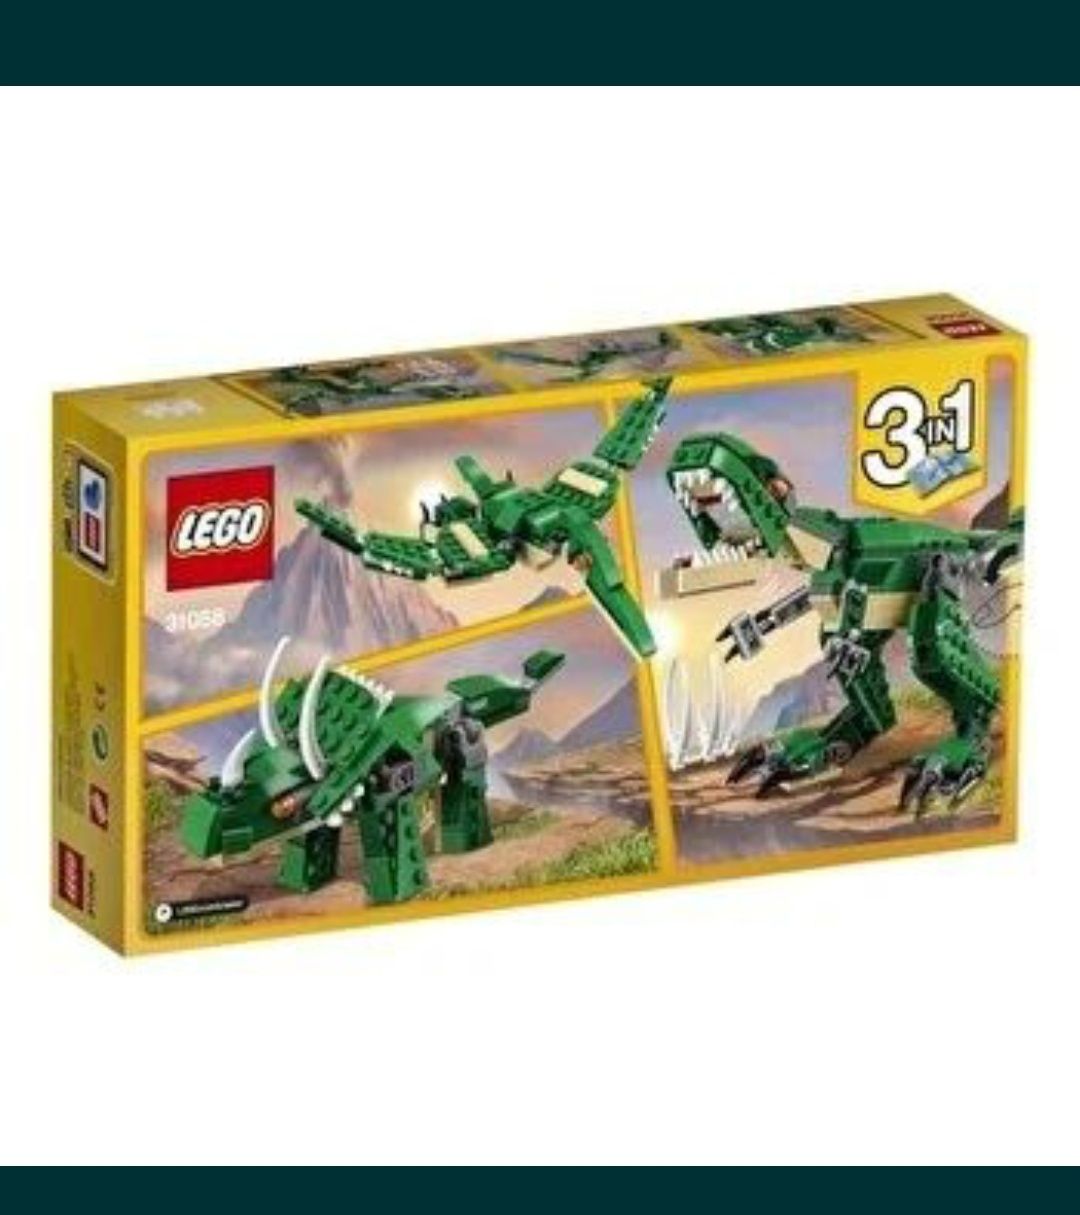 LEGO Creator 3 in 1 - 4 x  set 31088,, 31100, 31101, 31058